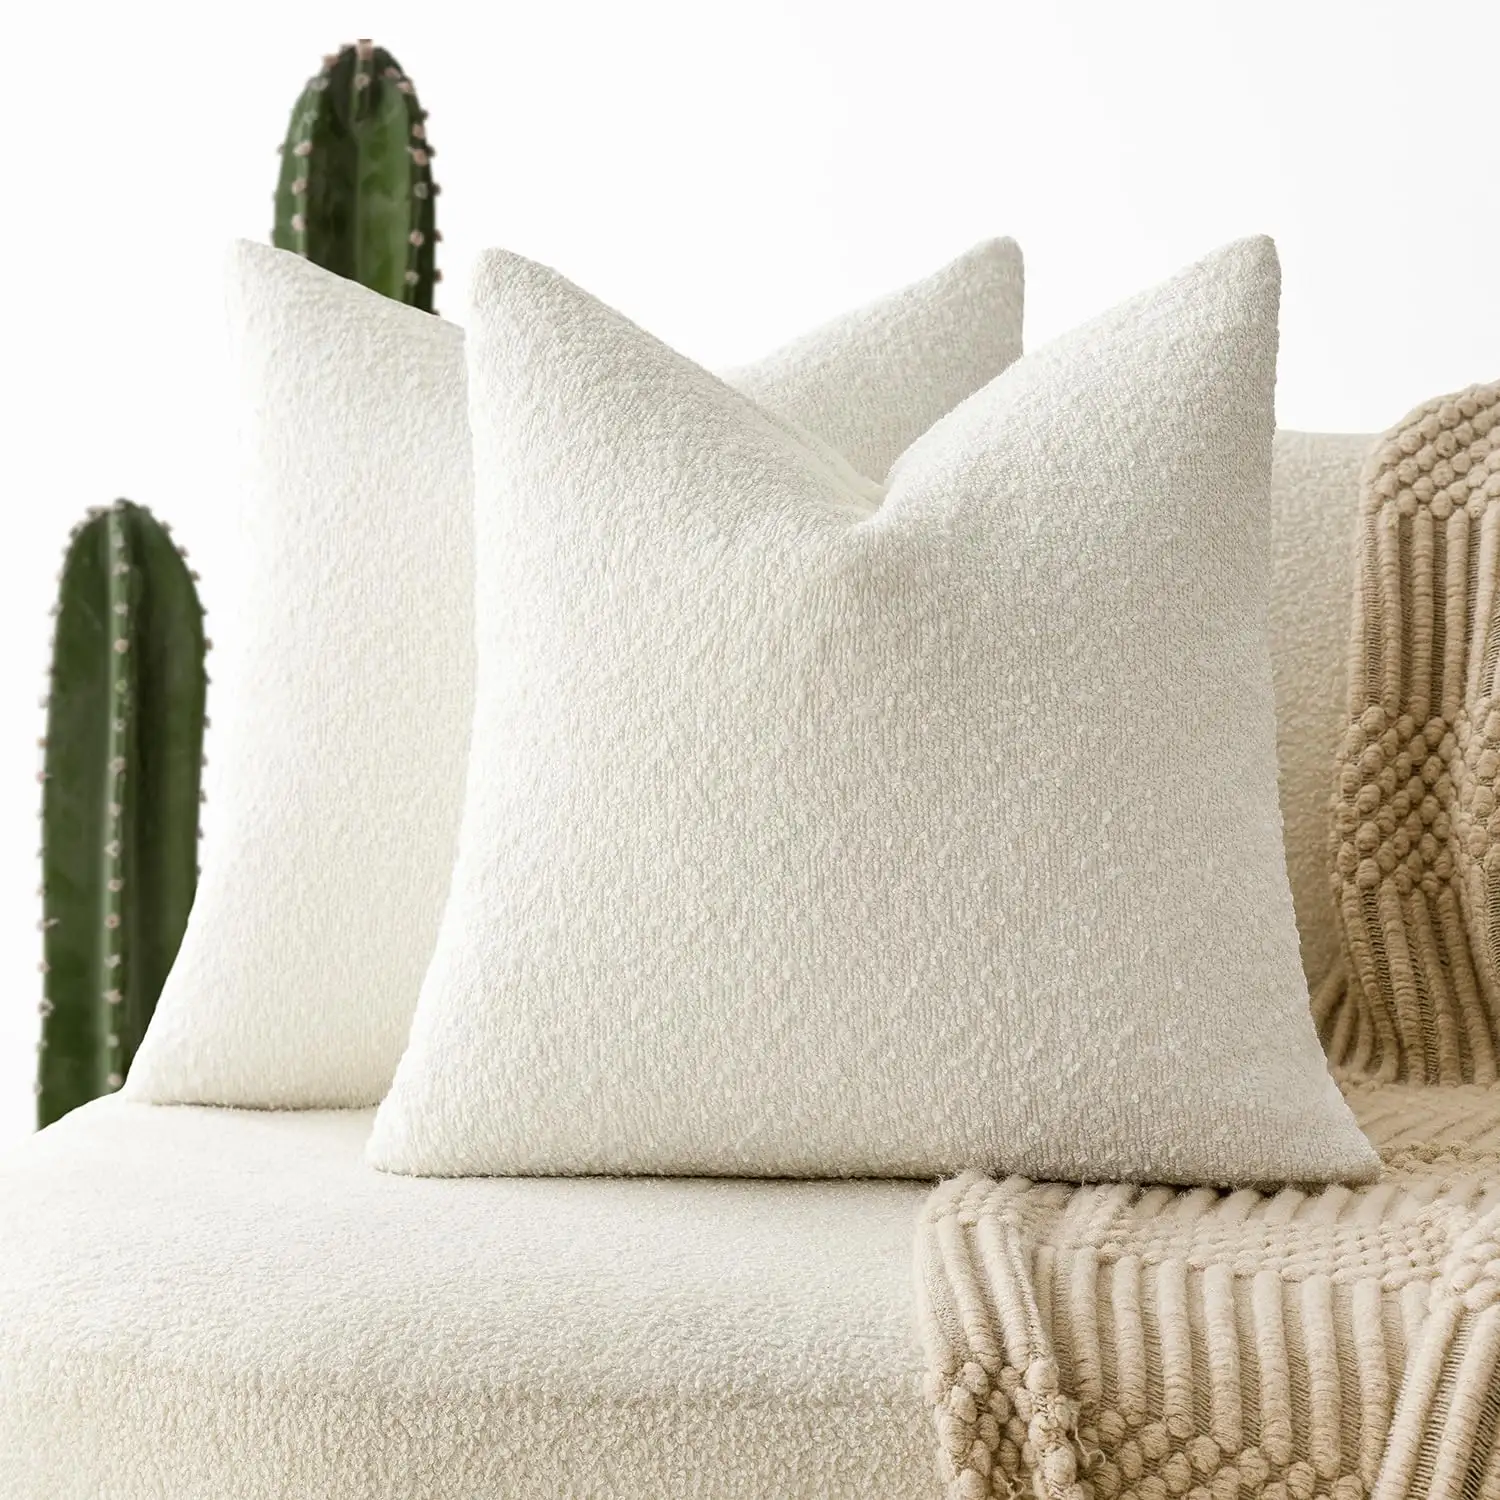 Capinha de almofada texturizada para campinas, capa branca para travesseiros